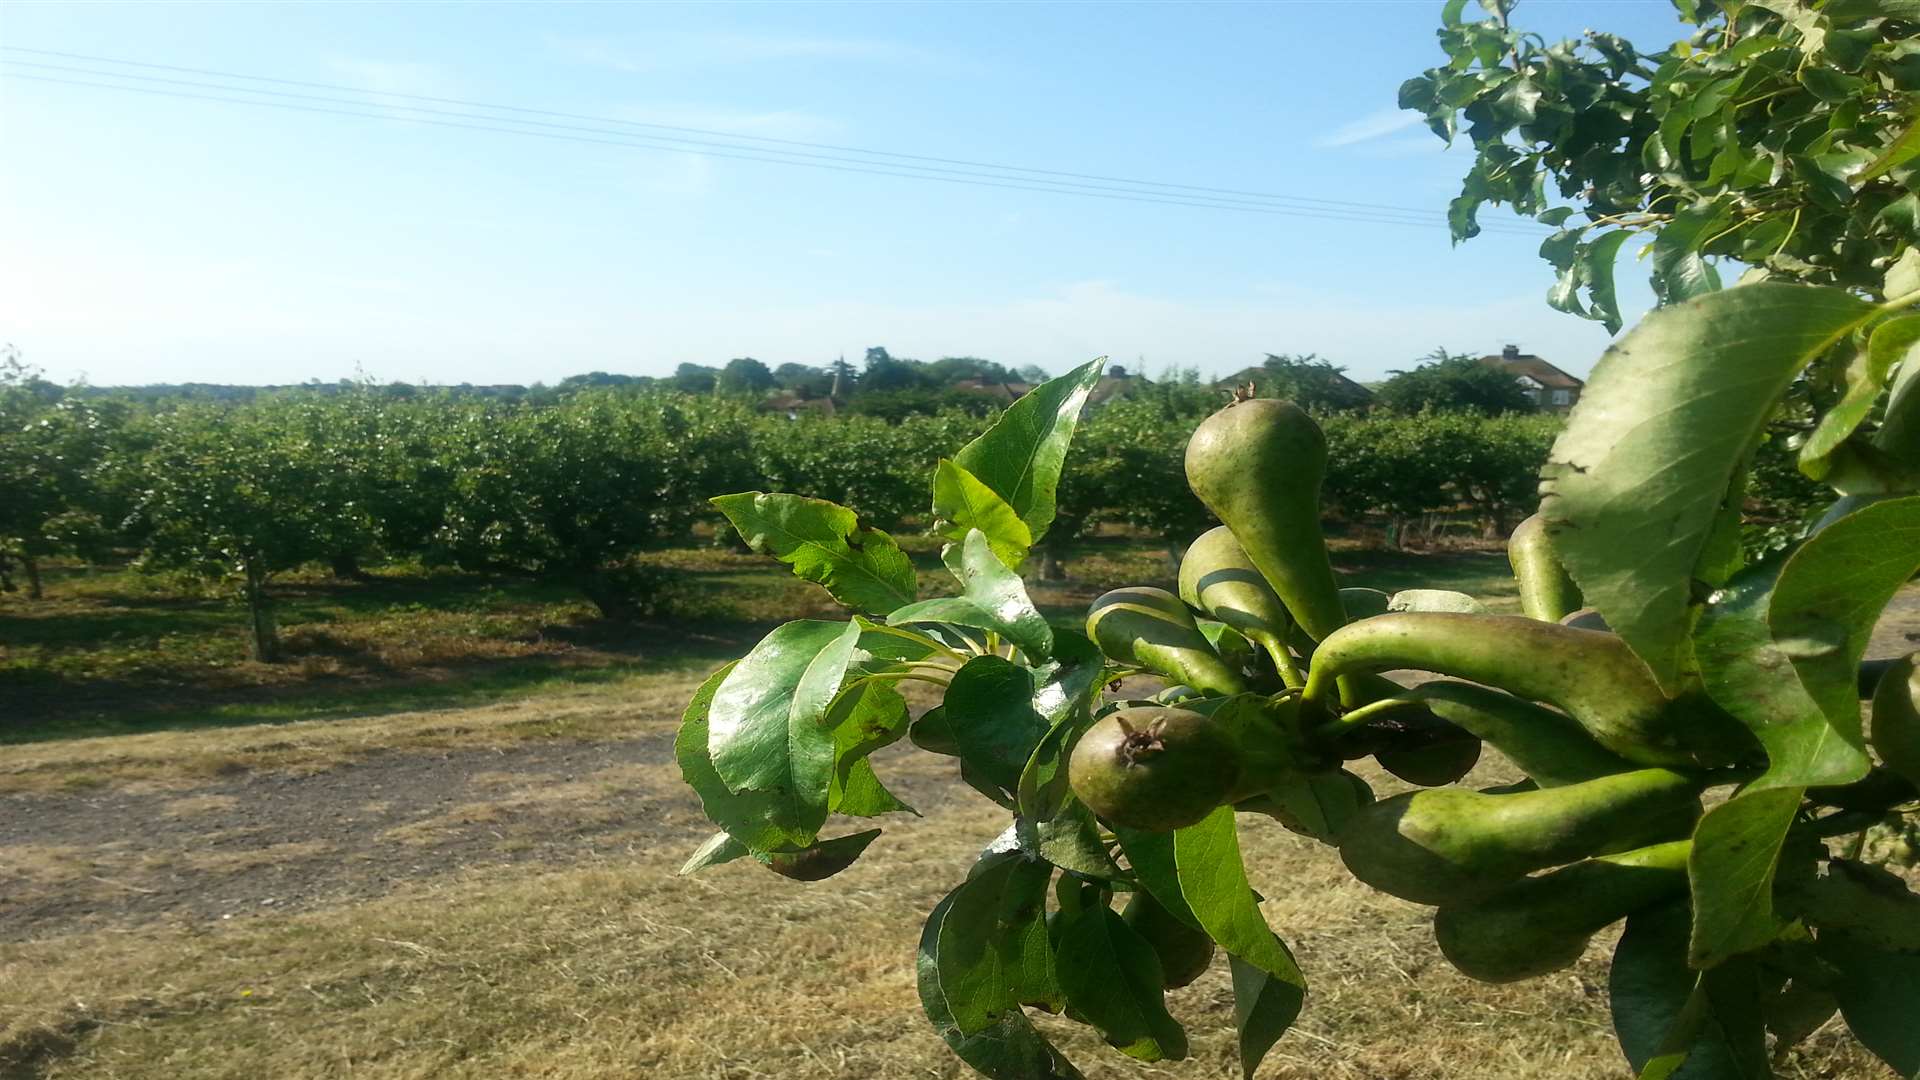 Pear orchards at Stones Farm in Bapchild, Sittingbourne